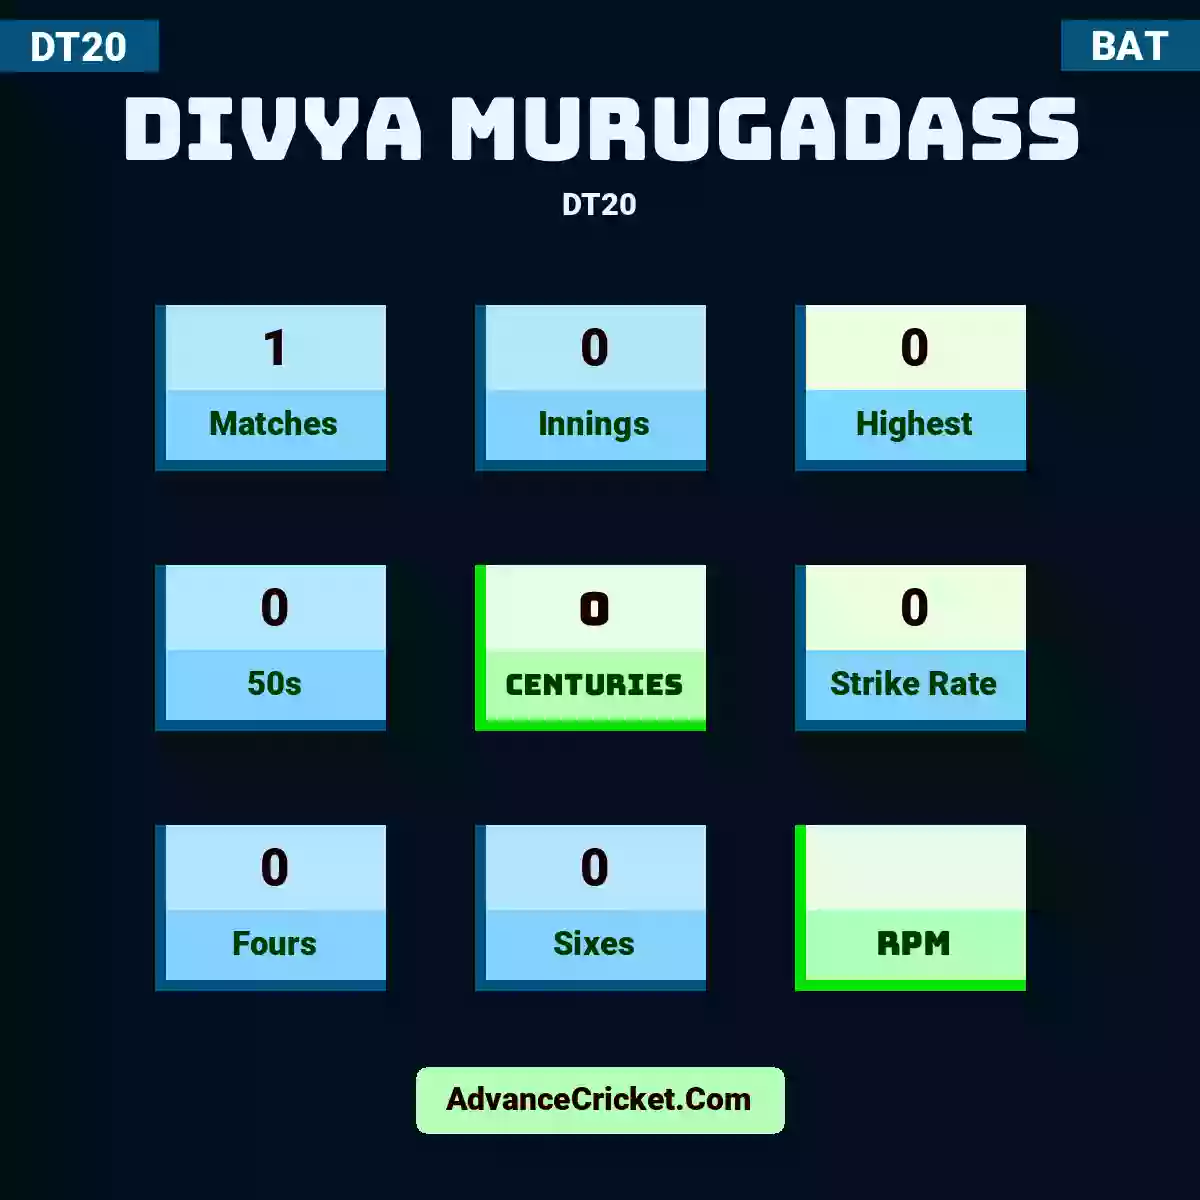 Divya Murugadass DT20 , Divya Murugadass played 1 matches, scored 0 runs as highest, 0 half-centuries, and 0 centuries, with a strike rate of 0. D.Murugadass hit 0 fours and 0 sixes.